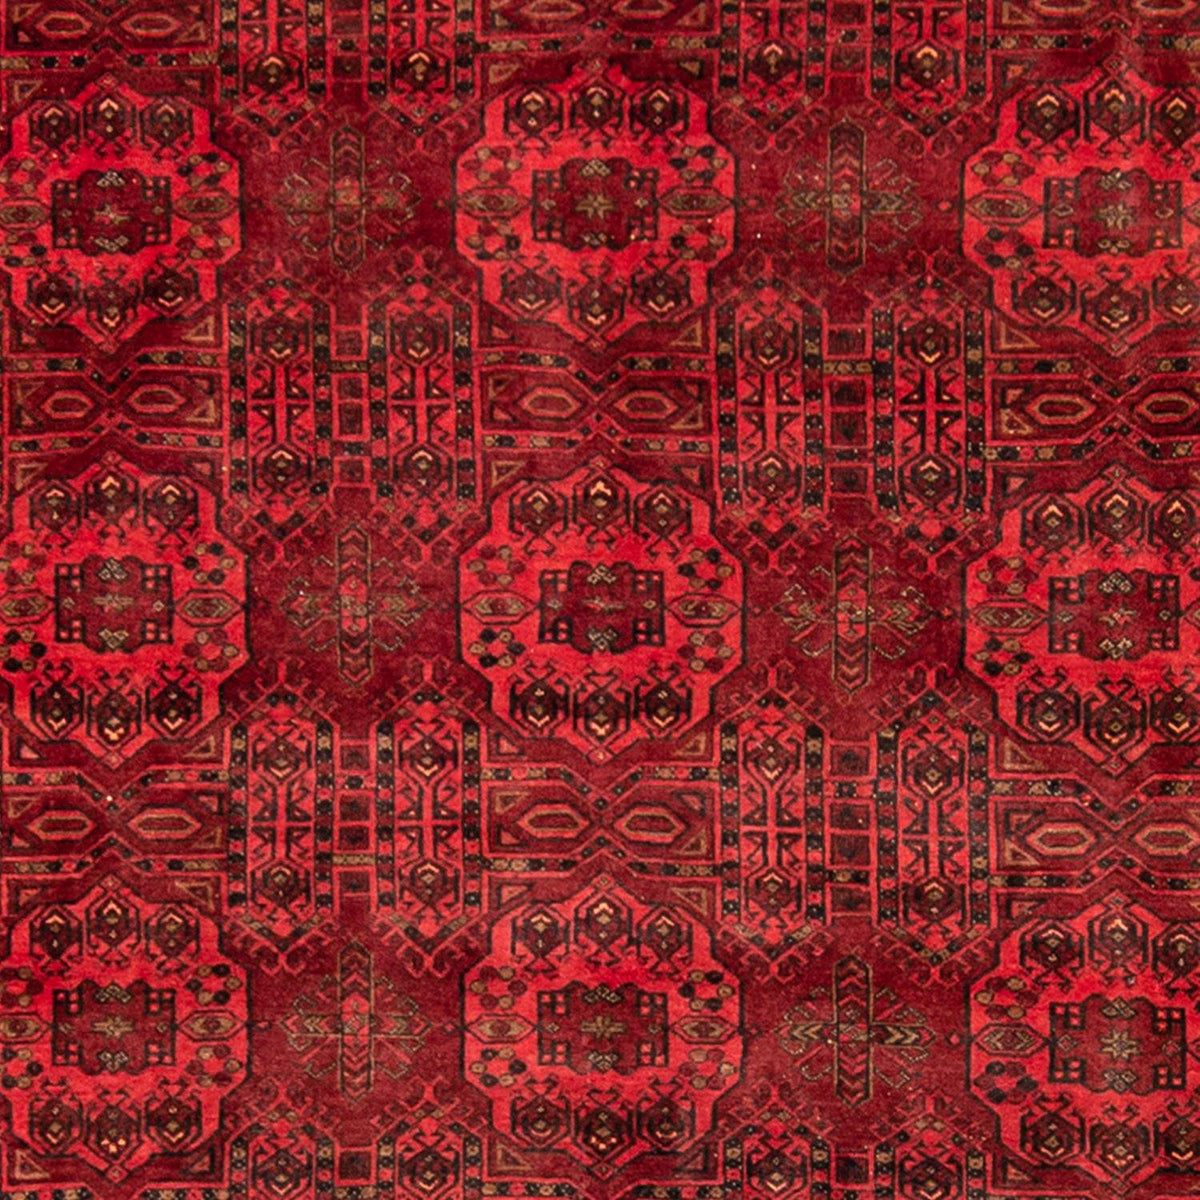 Fine Hand-knotted Wool Tribal Turkmen Rug 208cm x283cm